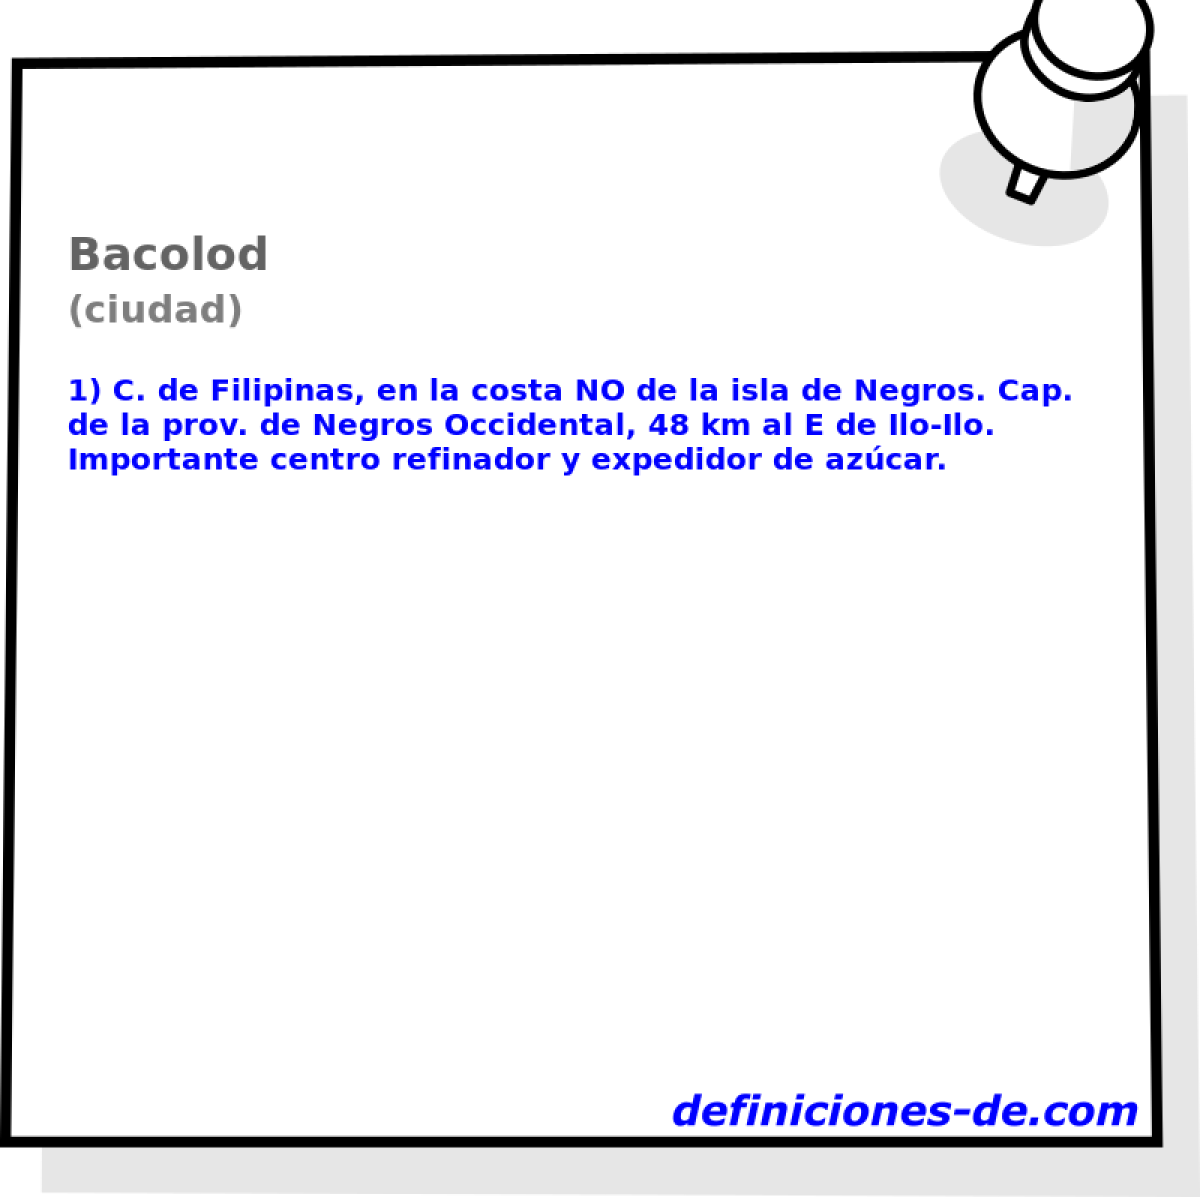 Bacolod (ciudad)